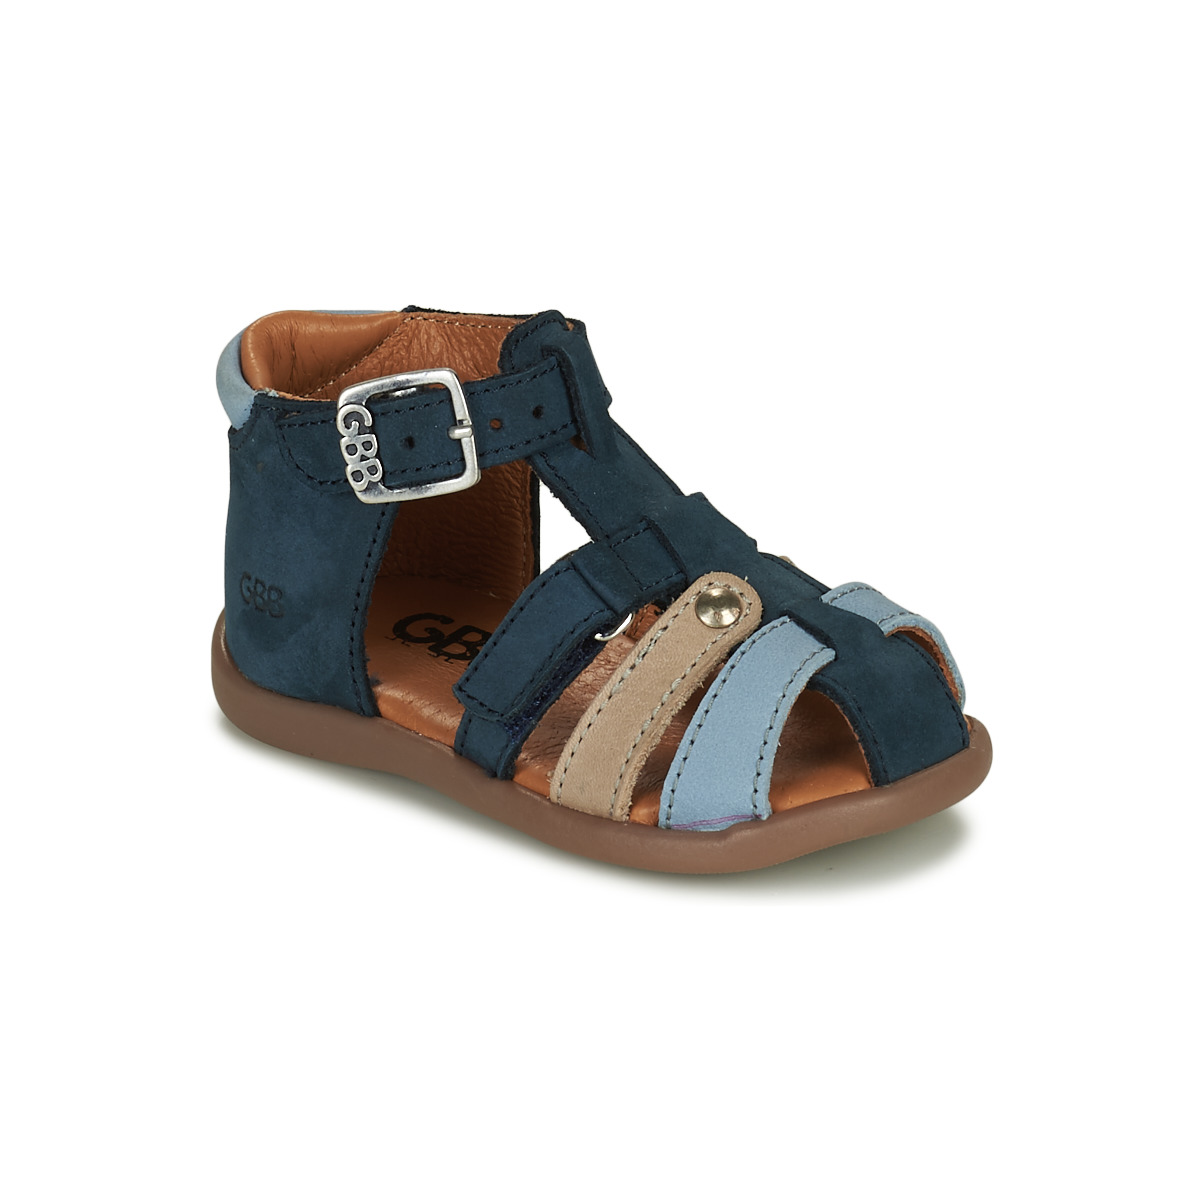 Chaussures Garçon Sandales et Nu-pieds GBB BIGOU Bleu